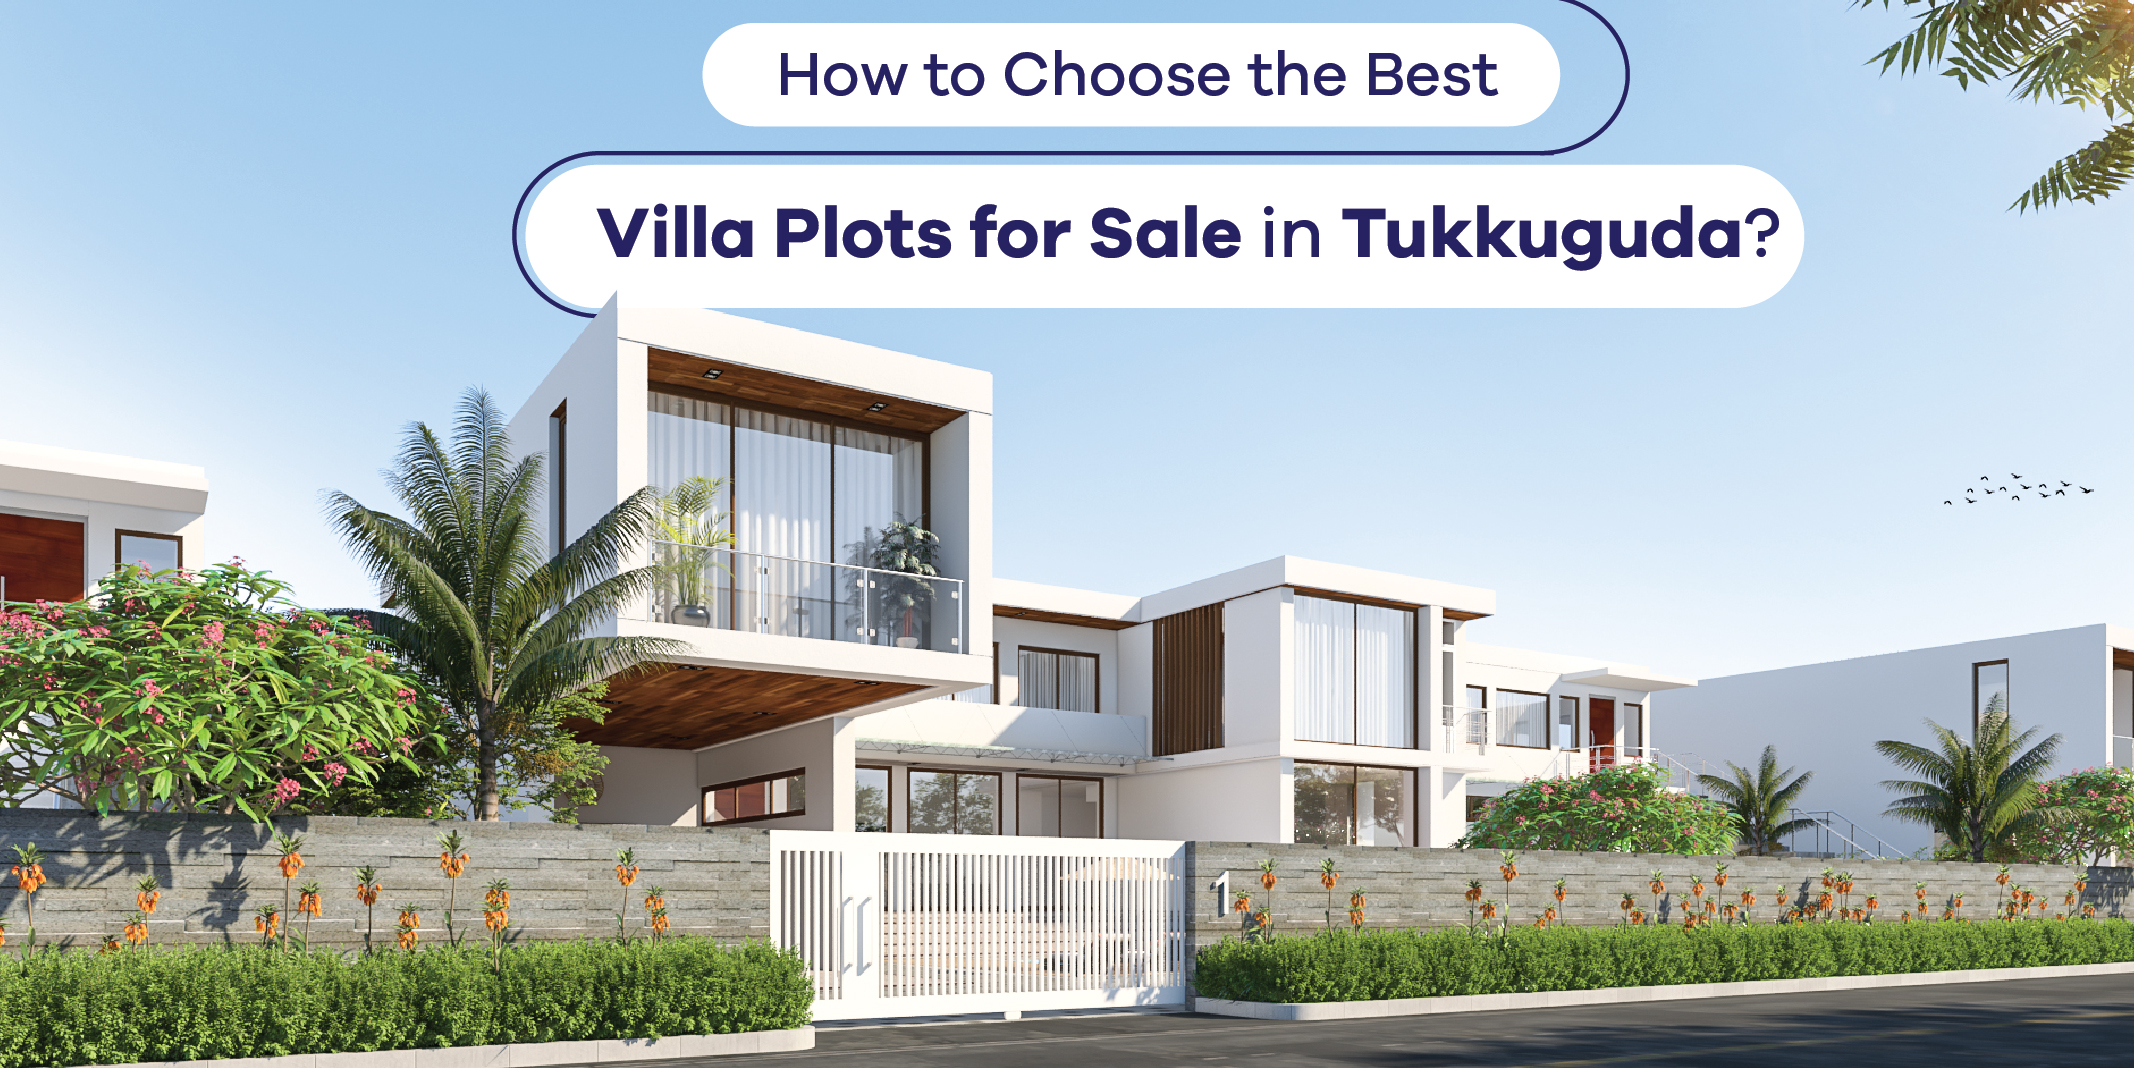 How to Choose the Best Villa Plots for Sale in Tukkuguda?